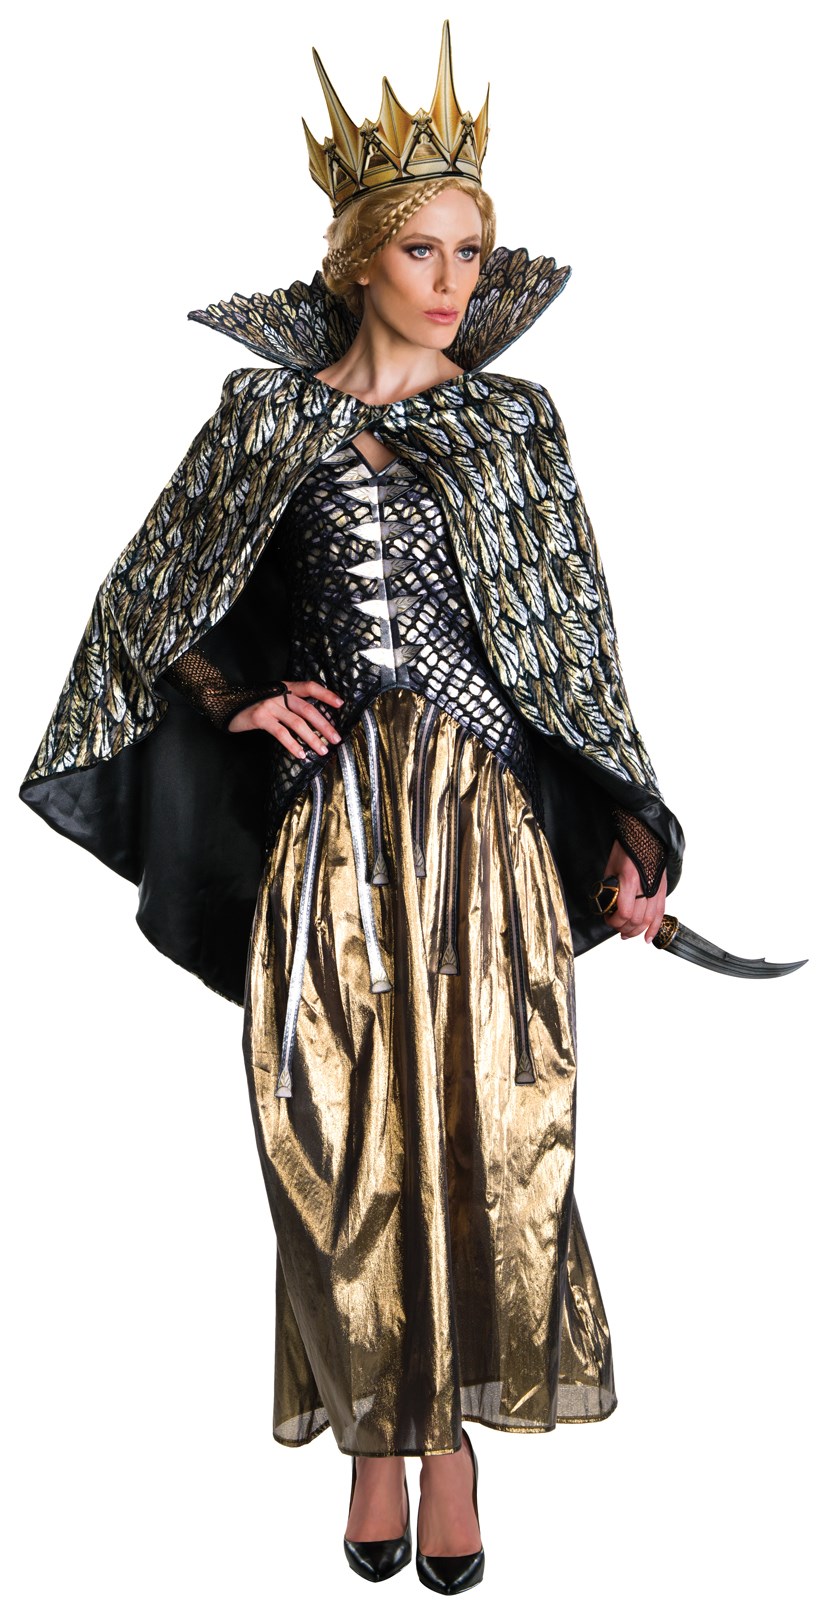 Snow White & The Huntsman Deluxe Queen Ravenna Adult Costume